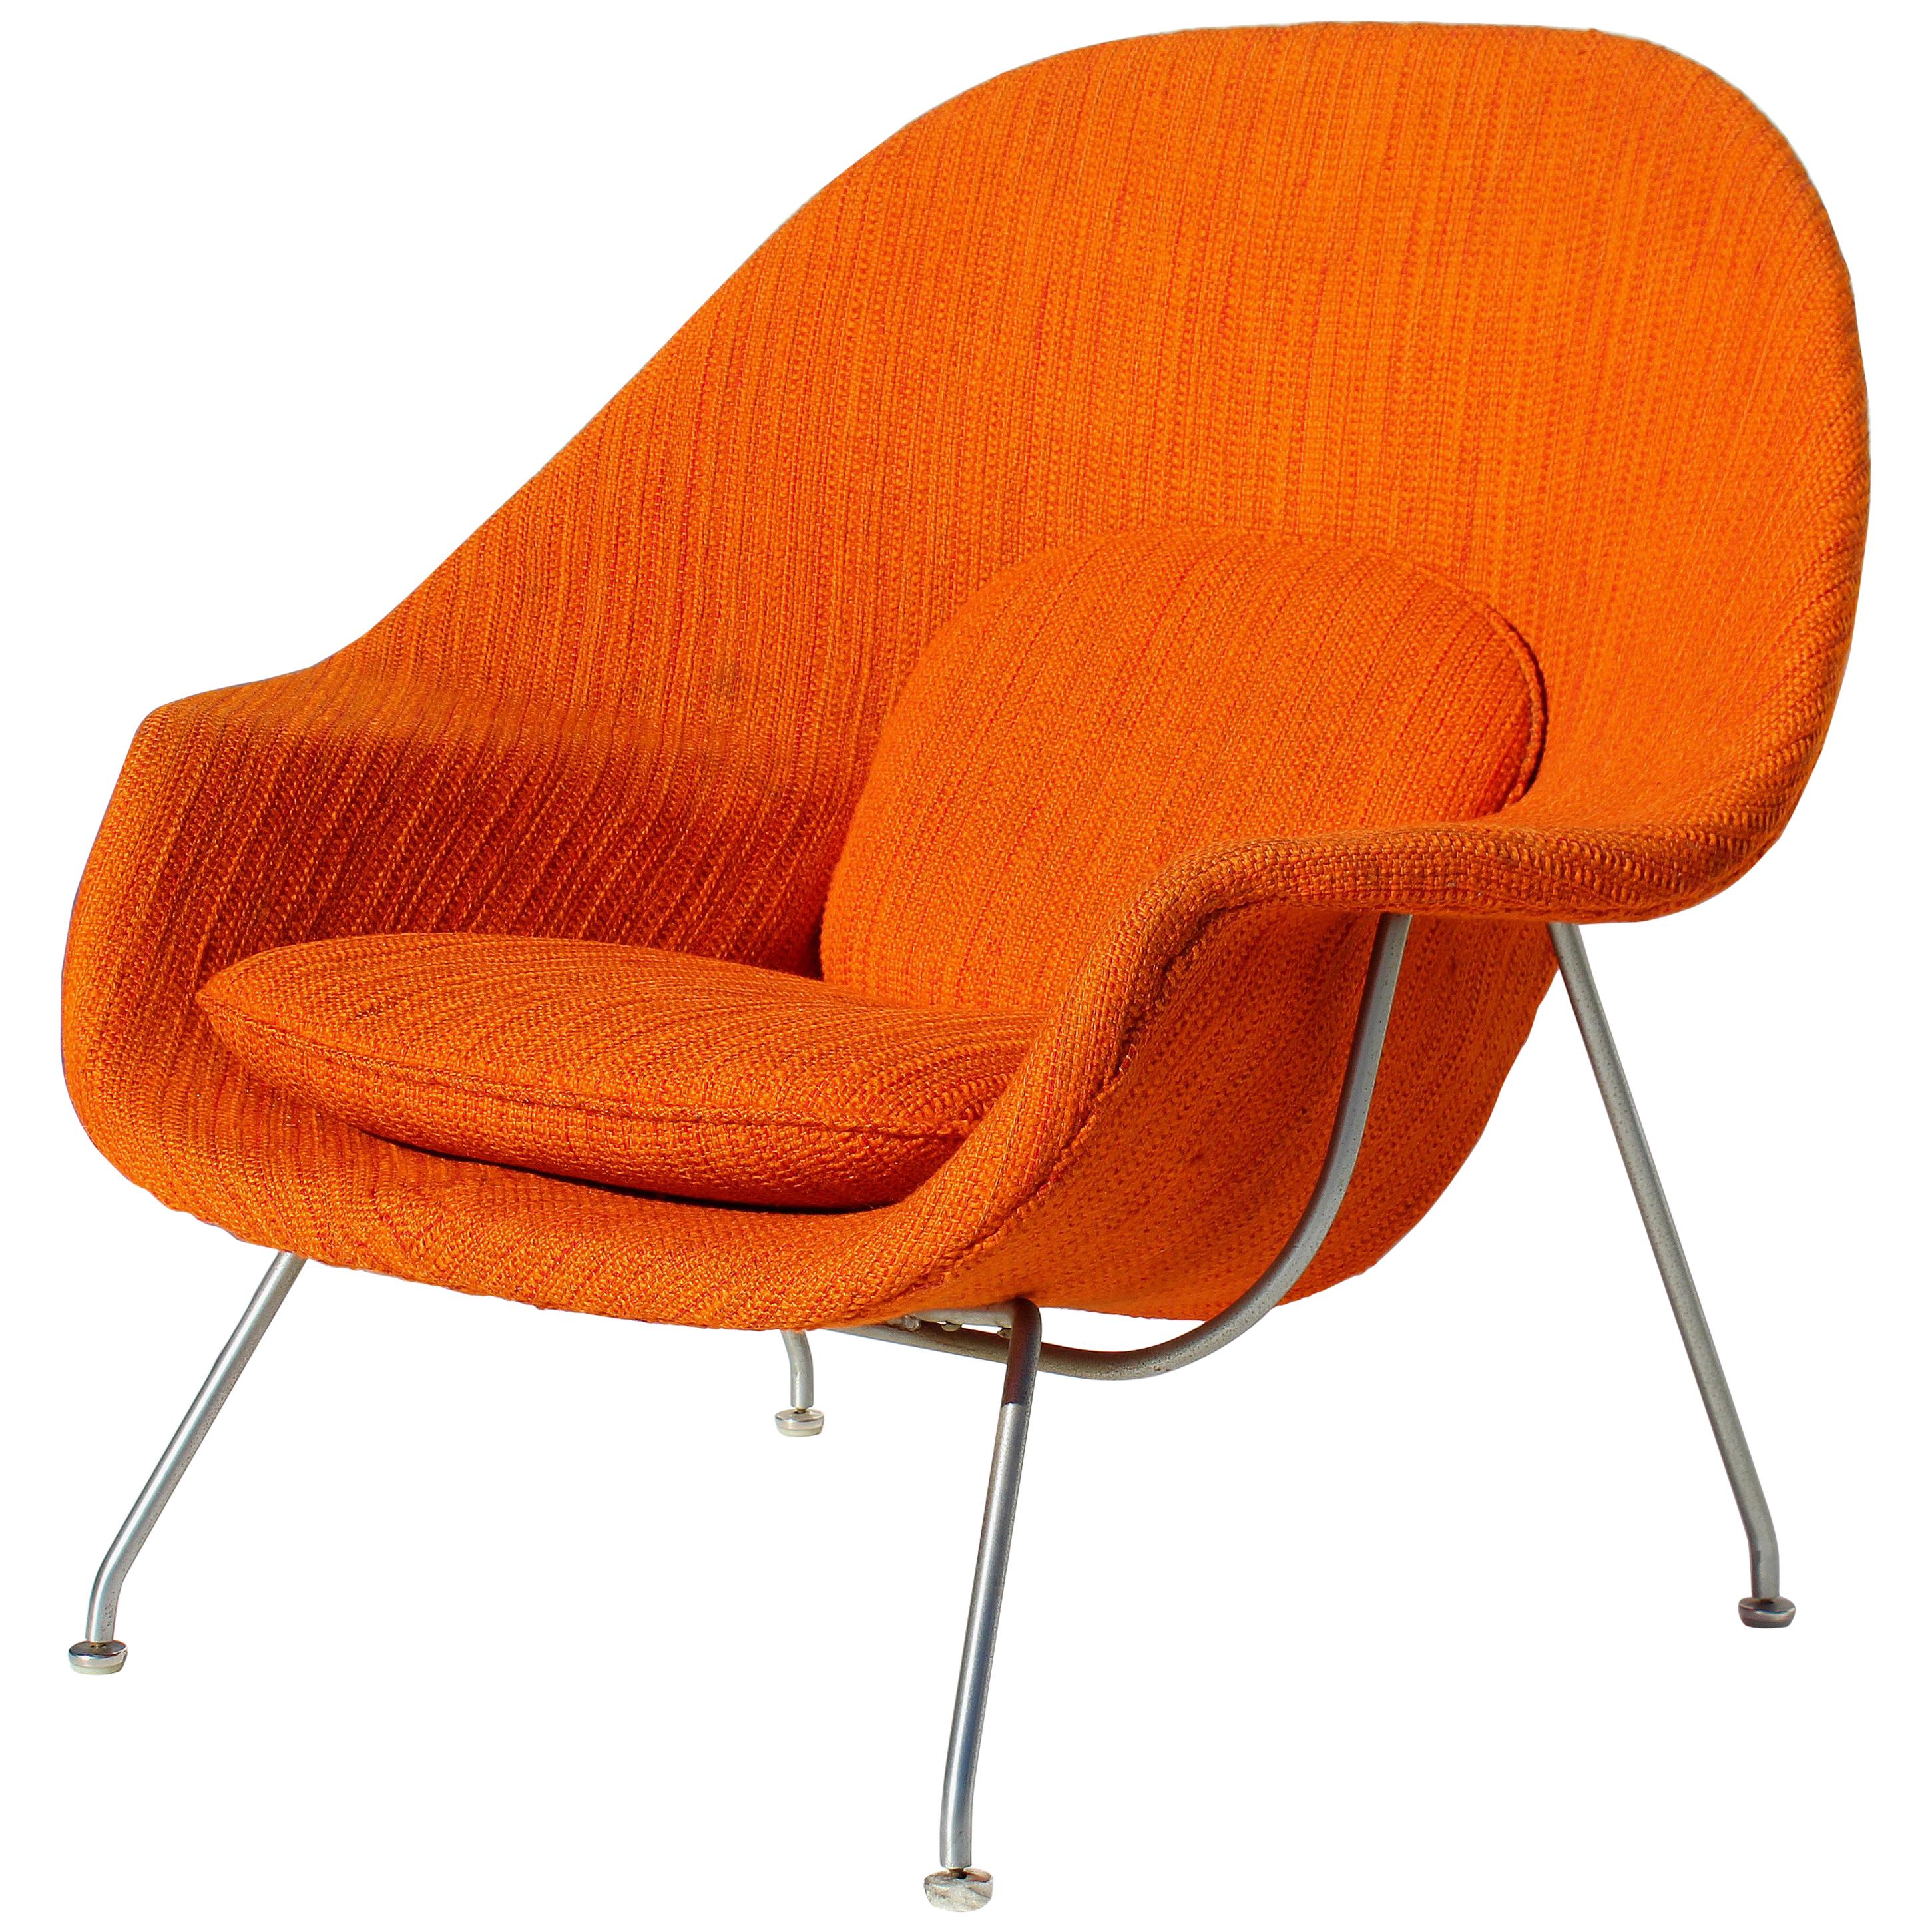 Eero Saarinen Womb Chair with Original Upholstery and Steel Frame